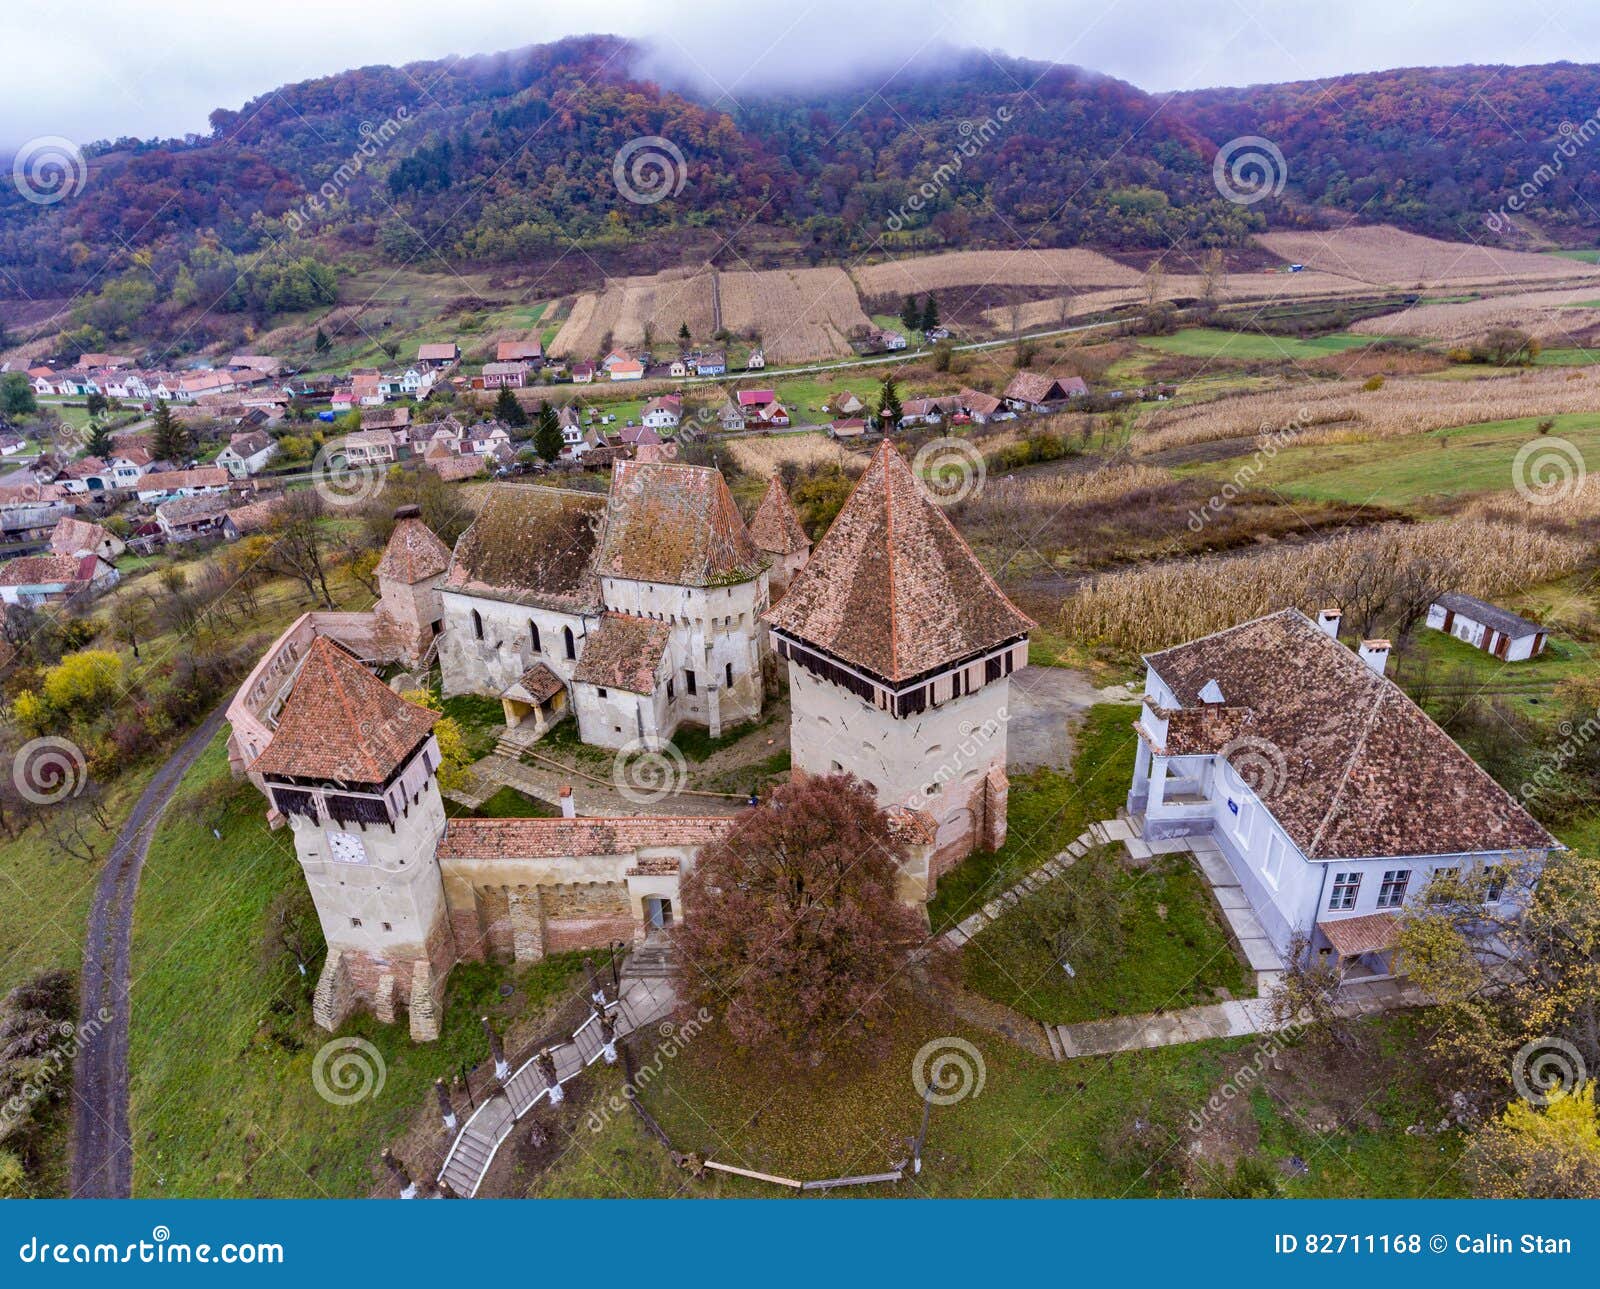 alma vii saxon fortified church in transylvania, romania. artist